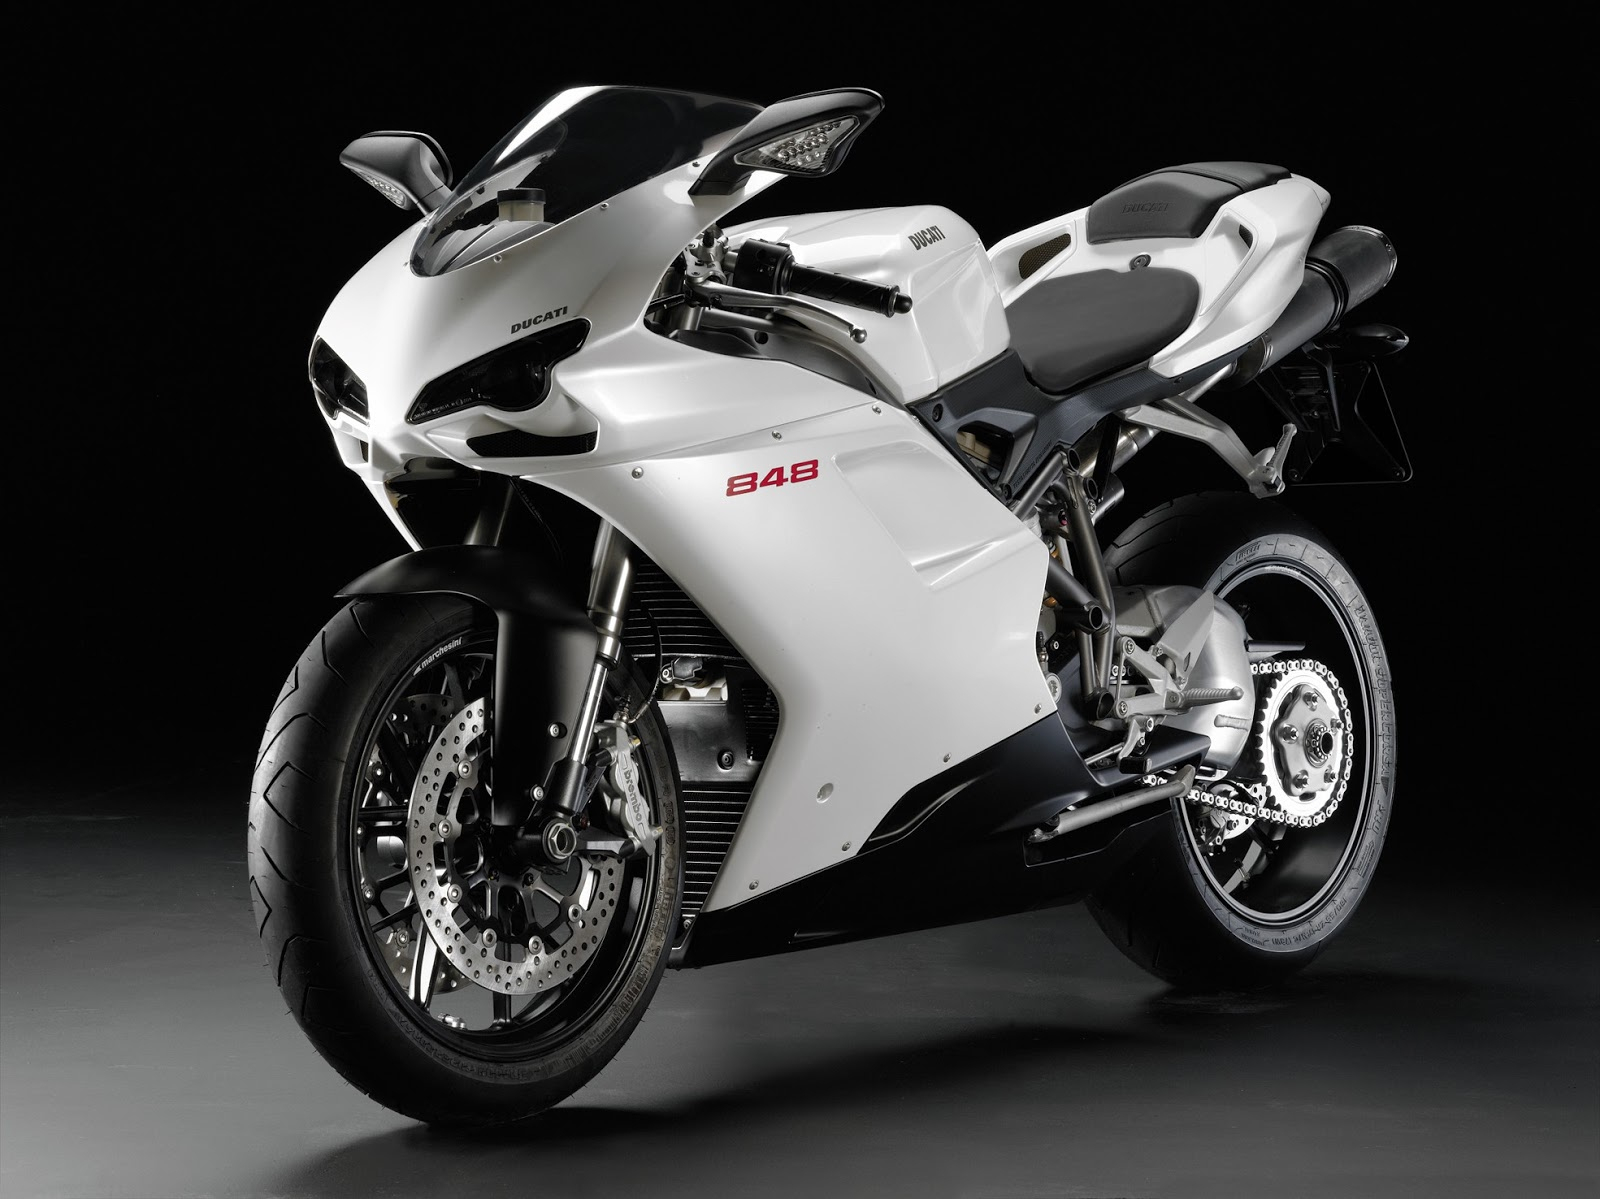 Enorme Fond Ecran Moto Ducati  Fond Ecran Pc destiné Fond Ecran Moto génial 